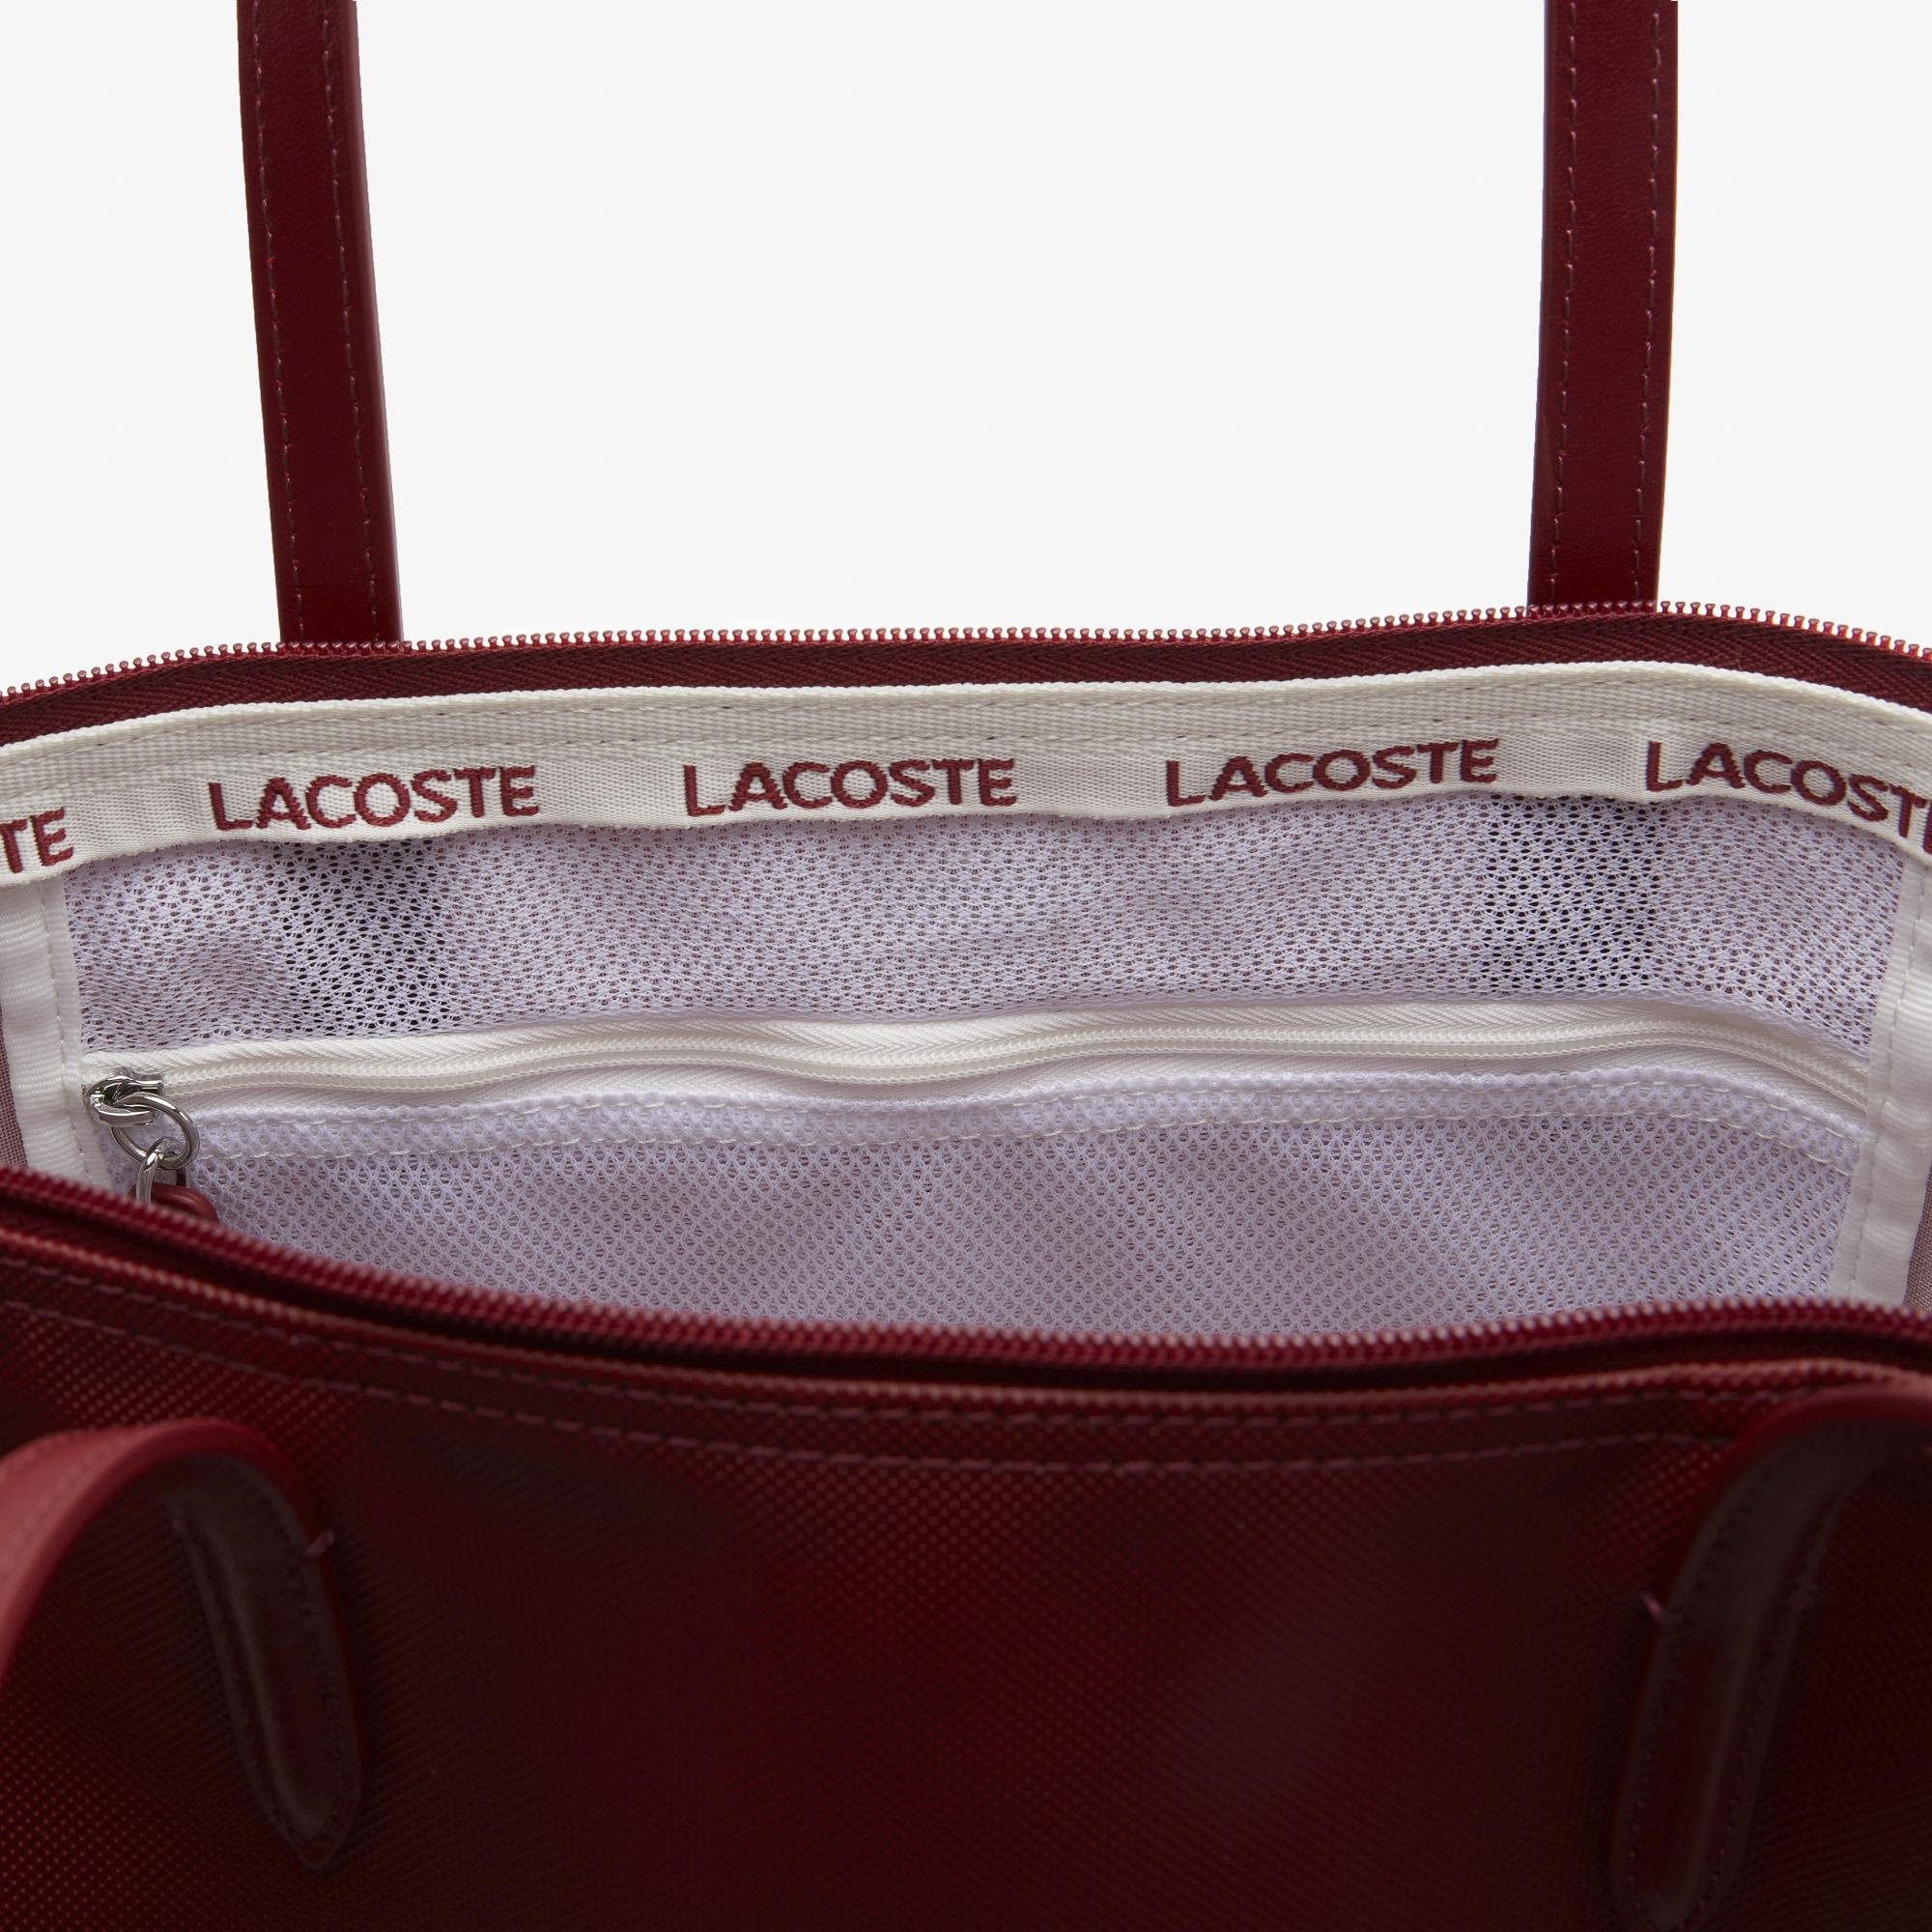 Lacoste damska torebka L.12.12 Concept zapinana na zamek błyskawiczny